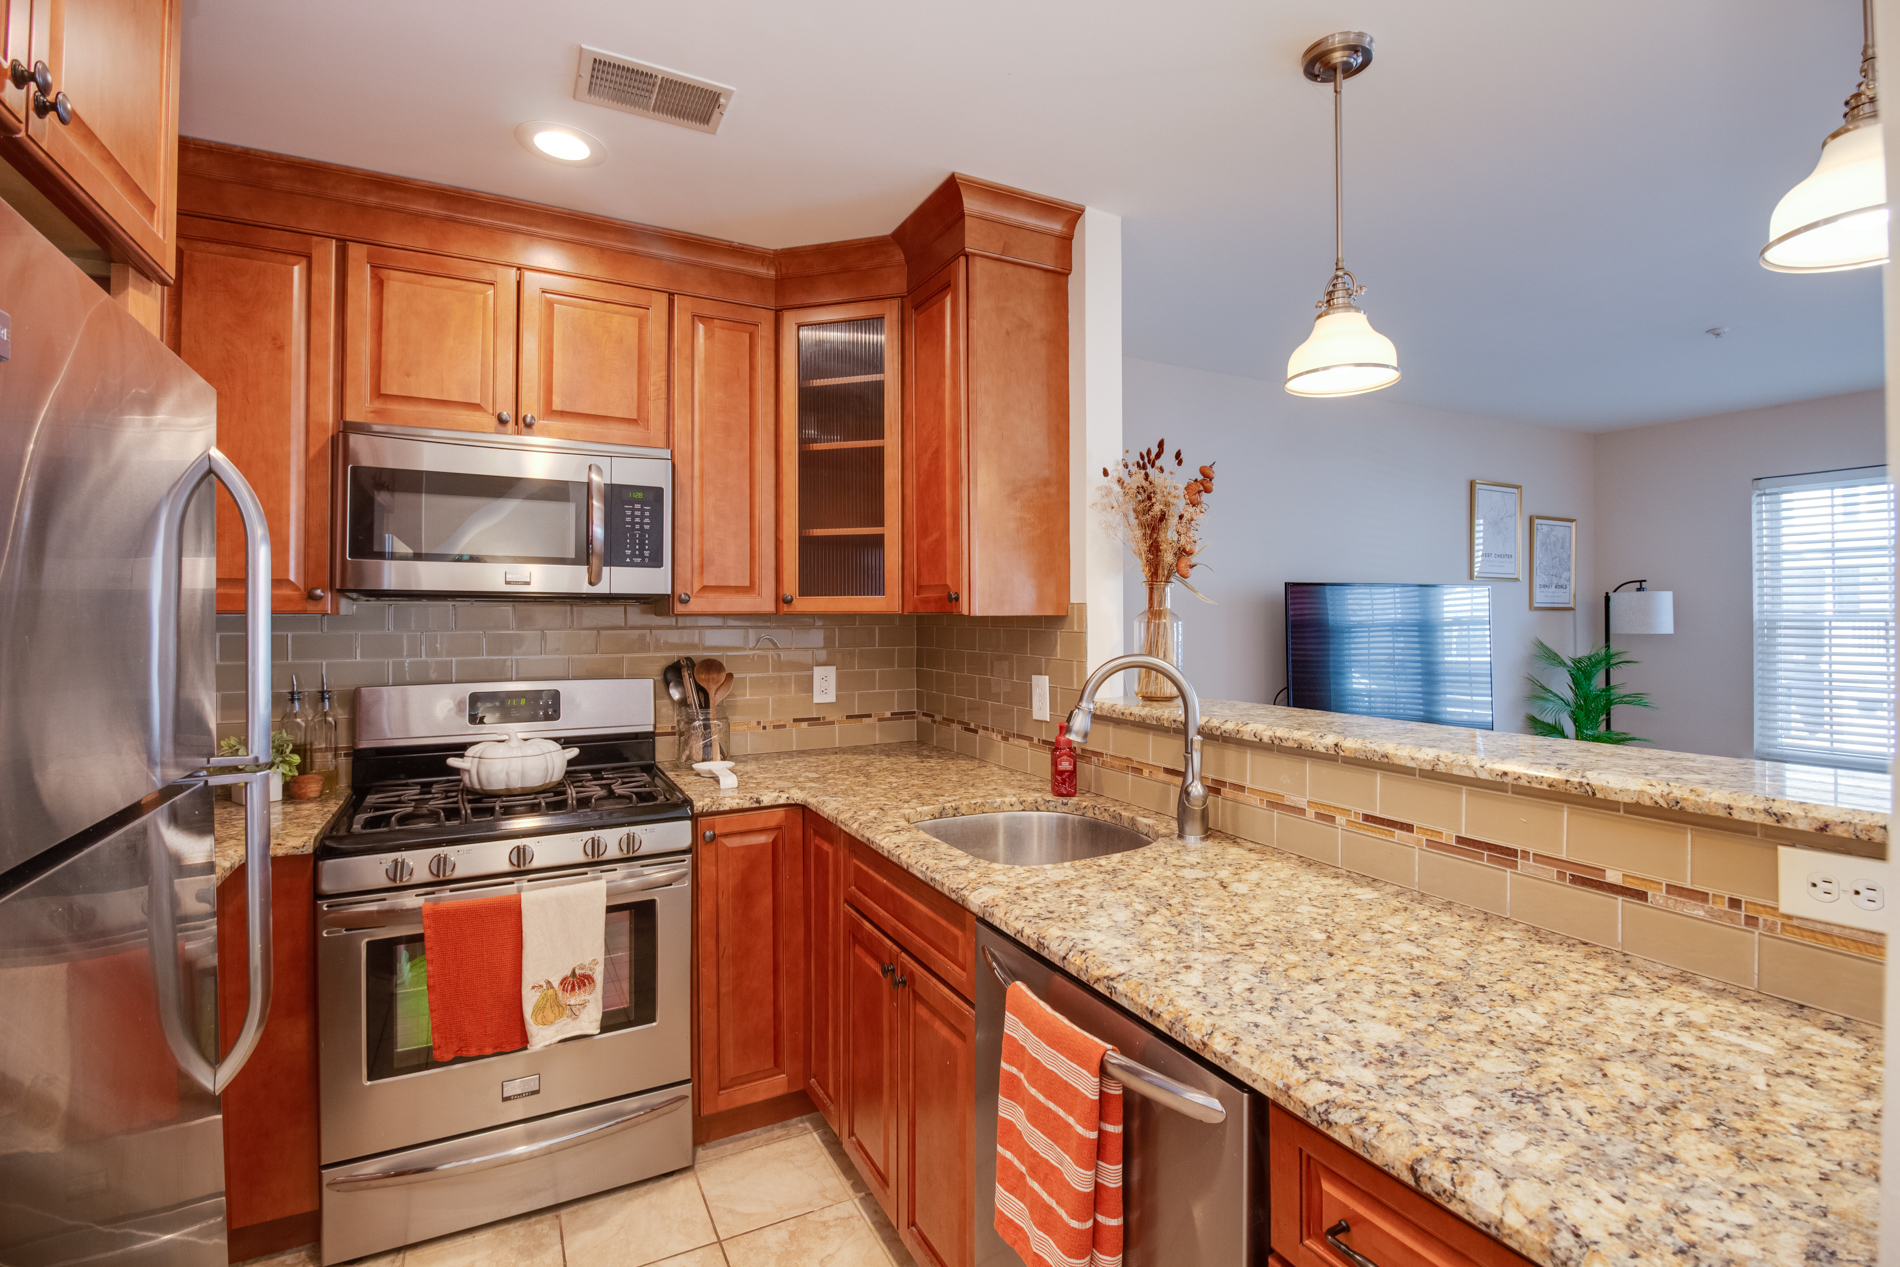 Upgrade kitchen cabinets and granite countertops